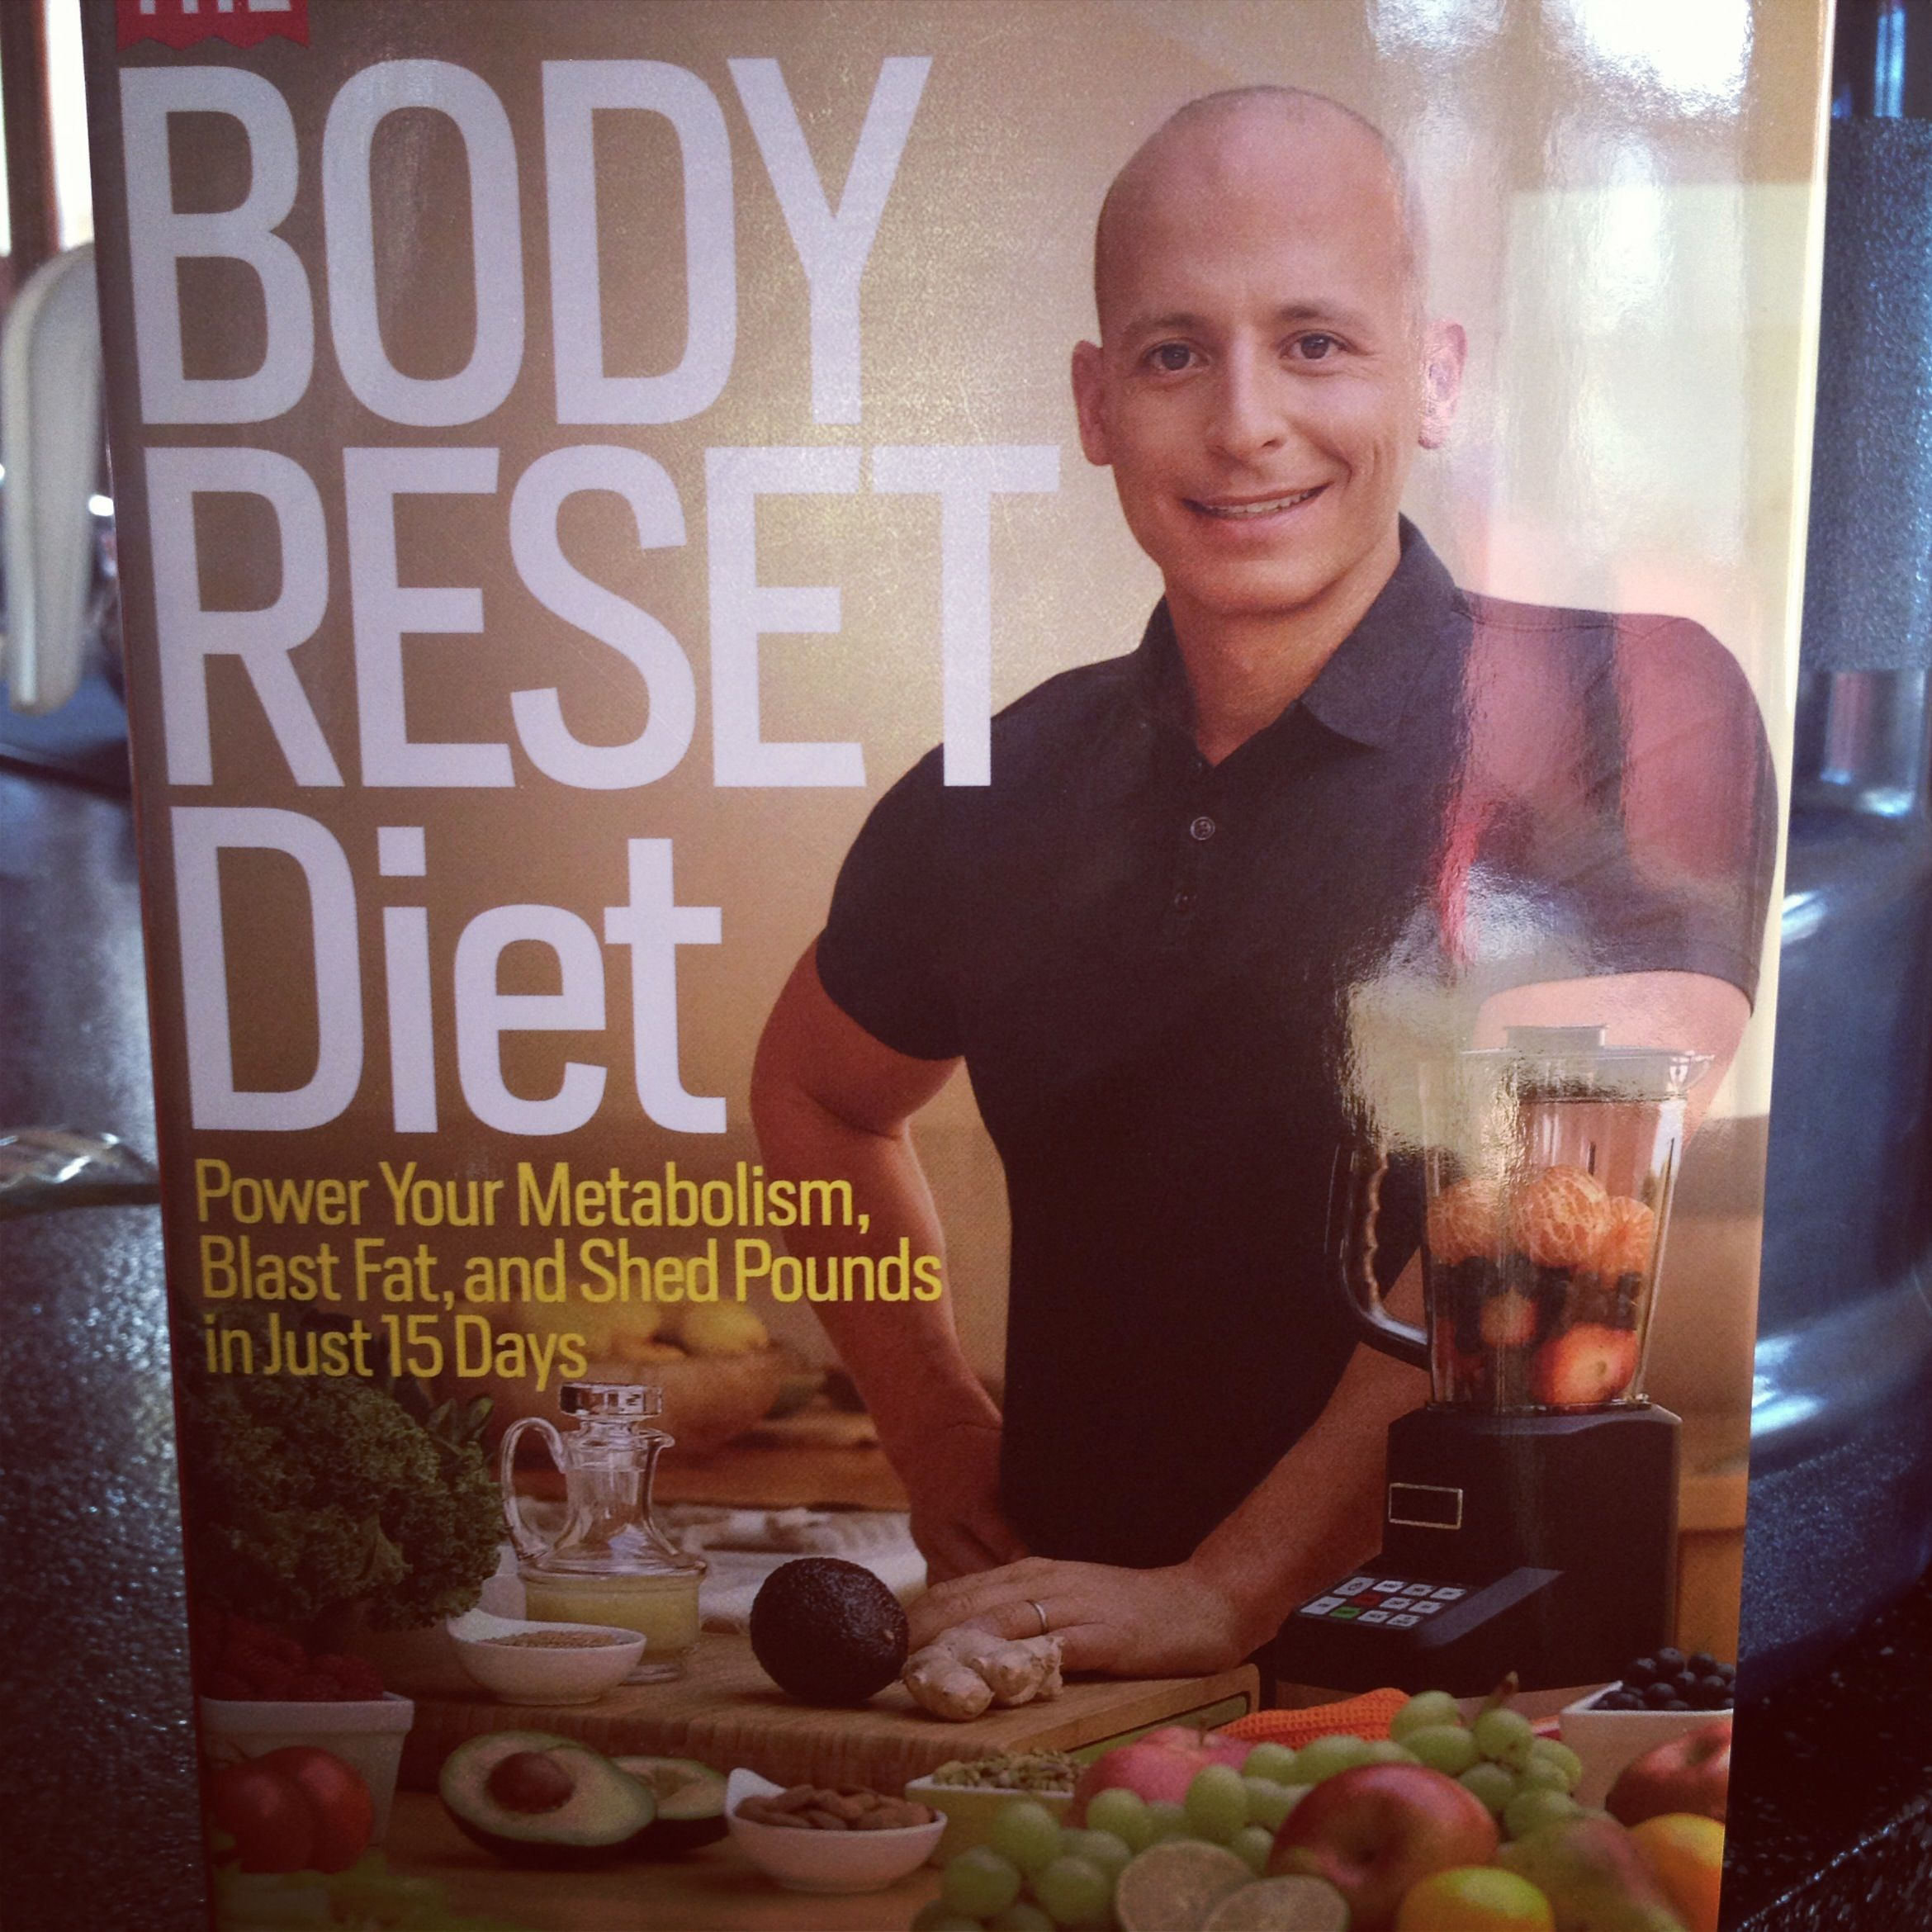 New Book I m Reading Body Reset Diet By Harley Pasternak 